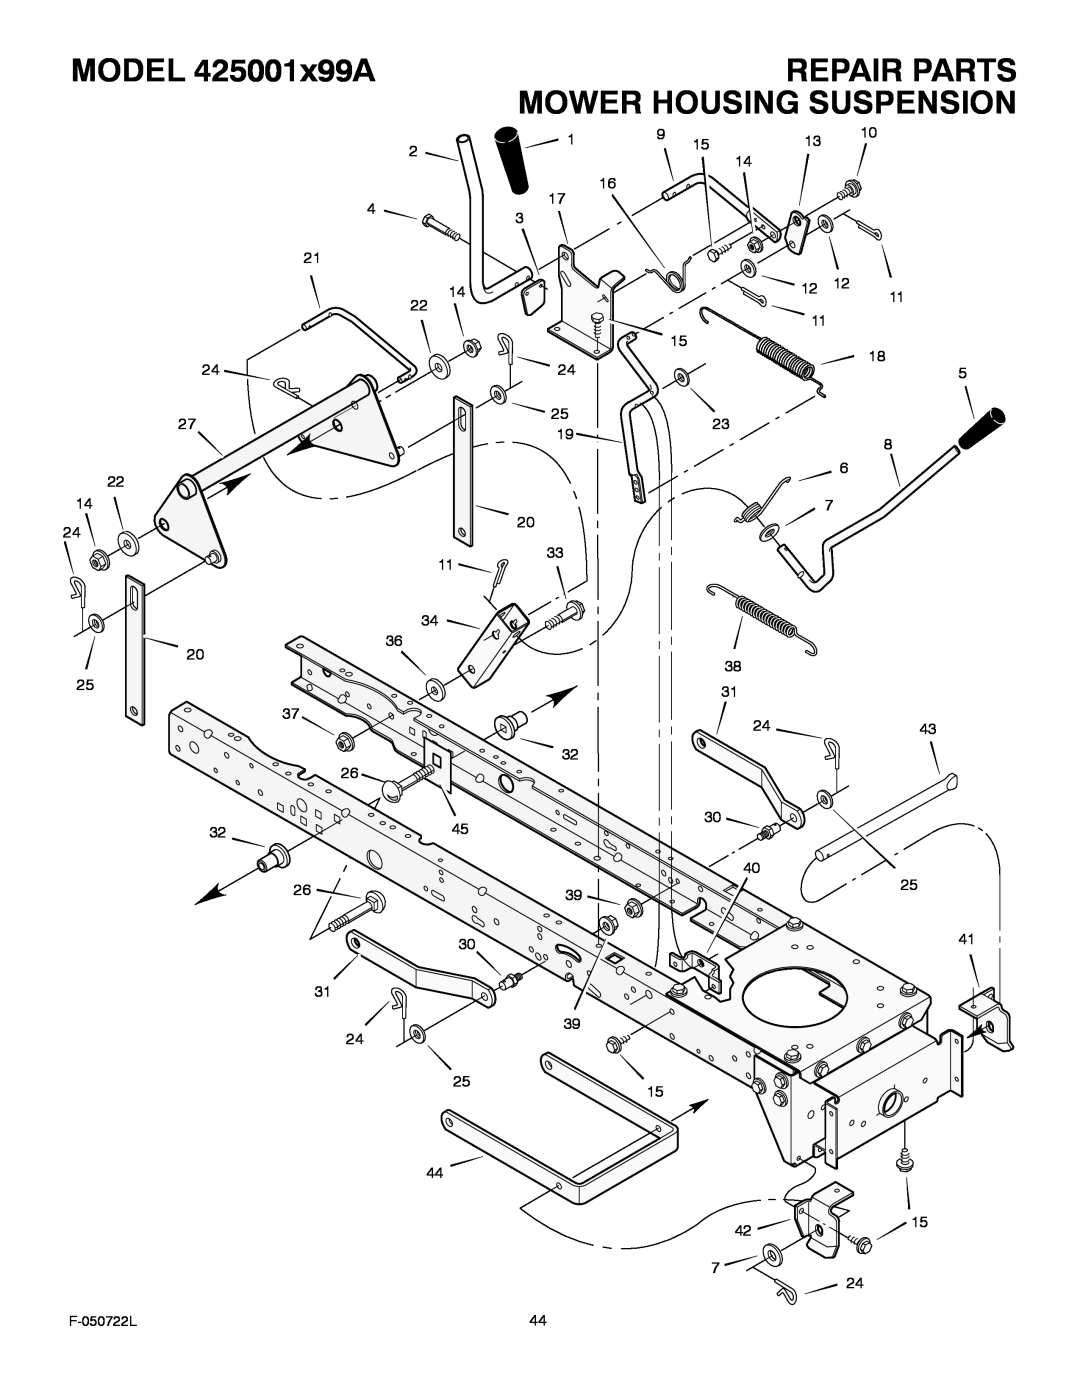 Murray manual Repair Parts Mower Housing Suspension, MODEL 425001x99A, F-050722L 